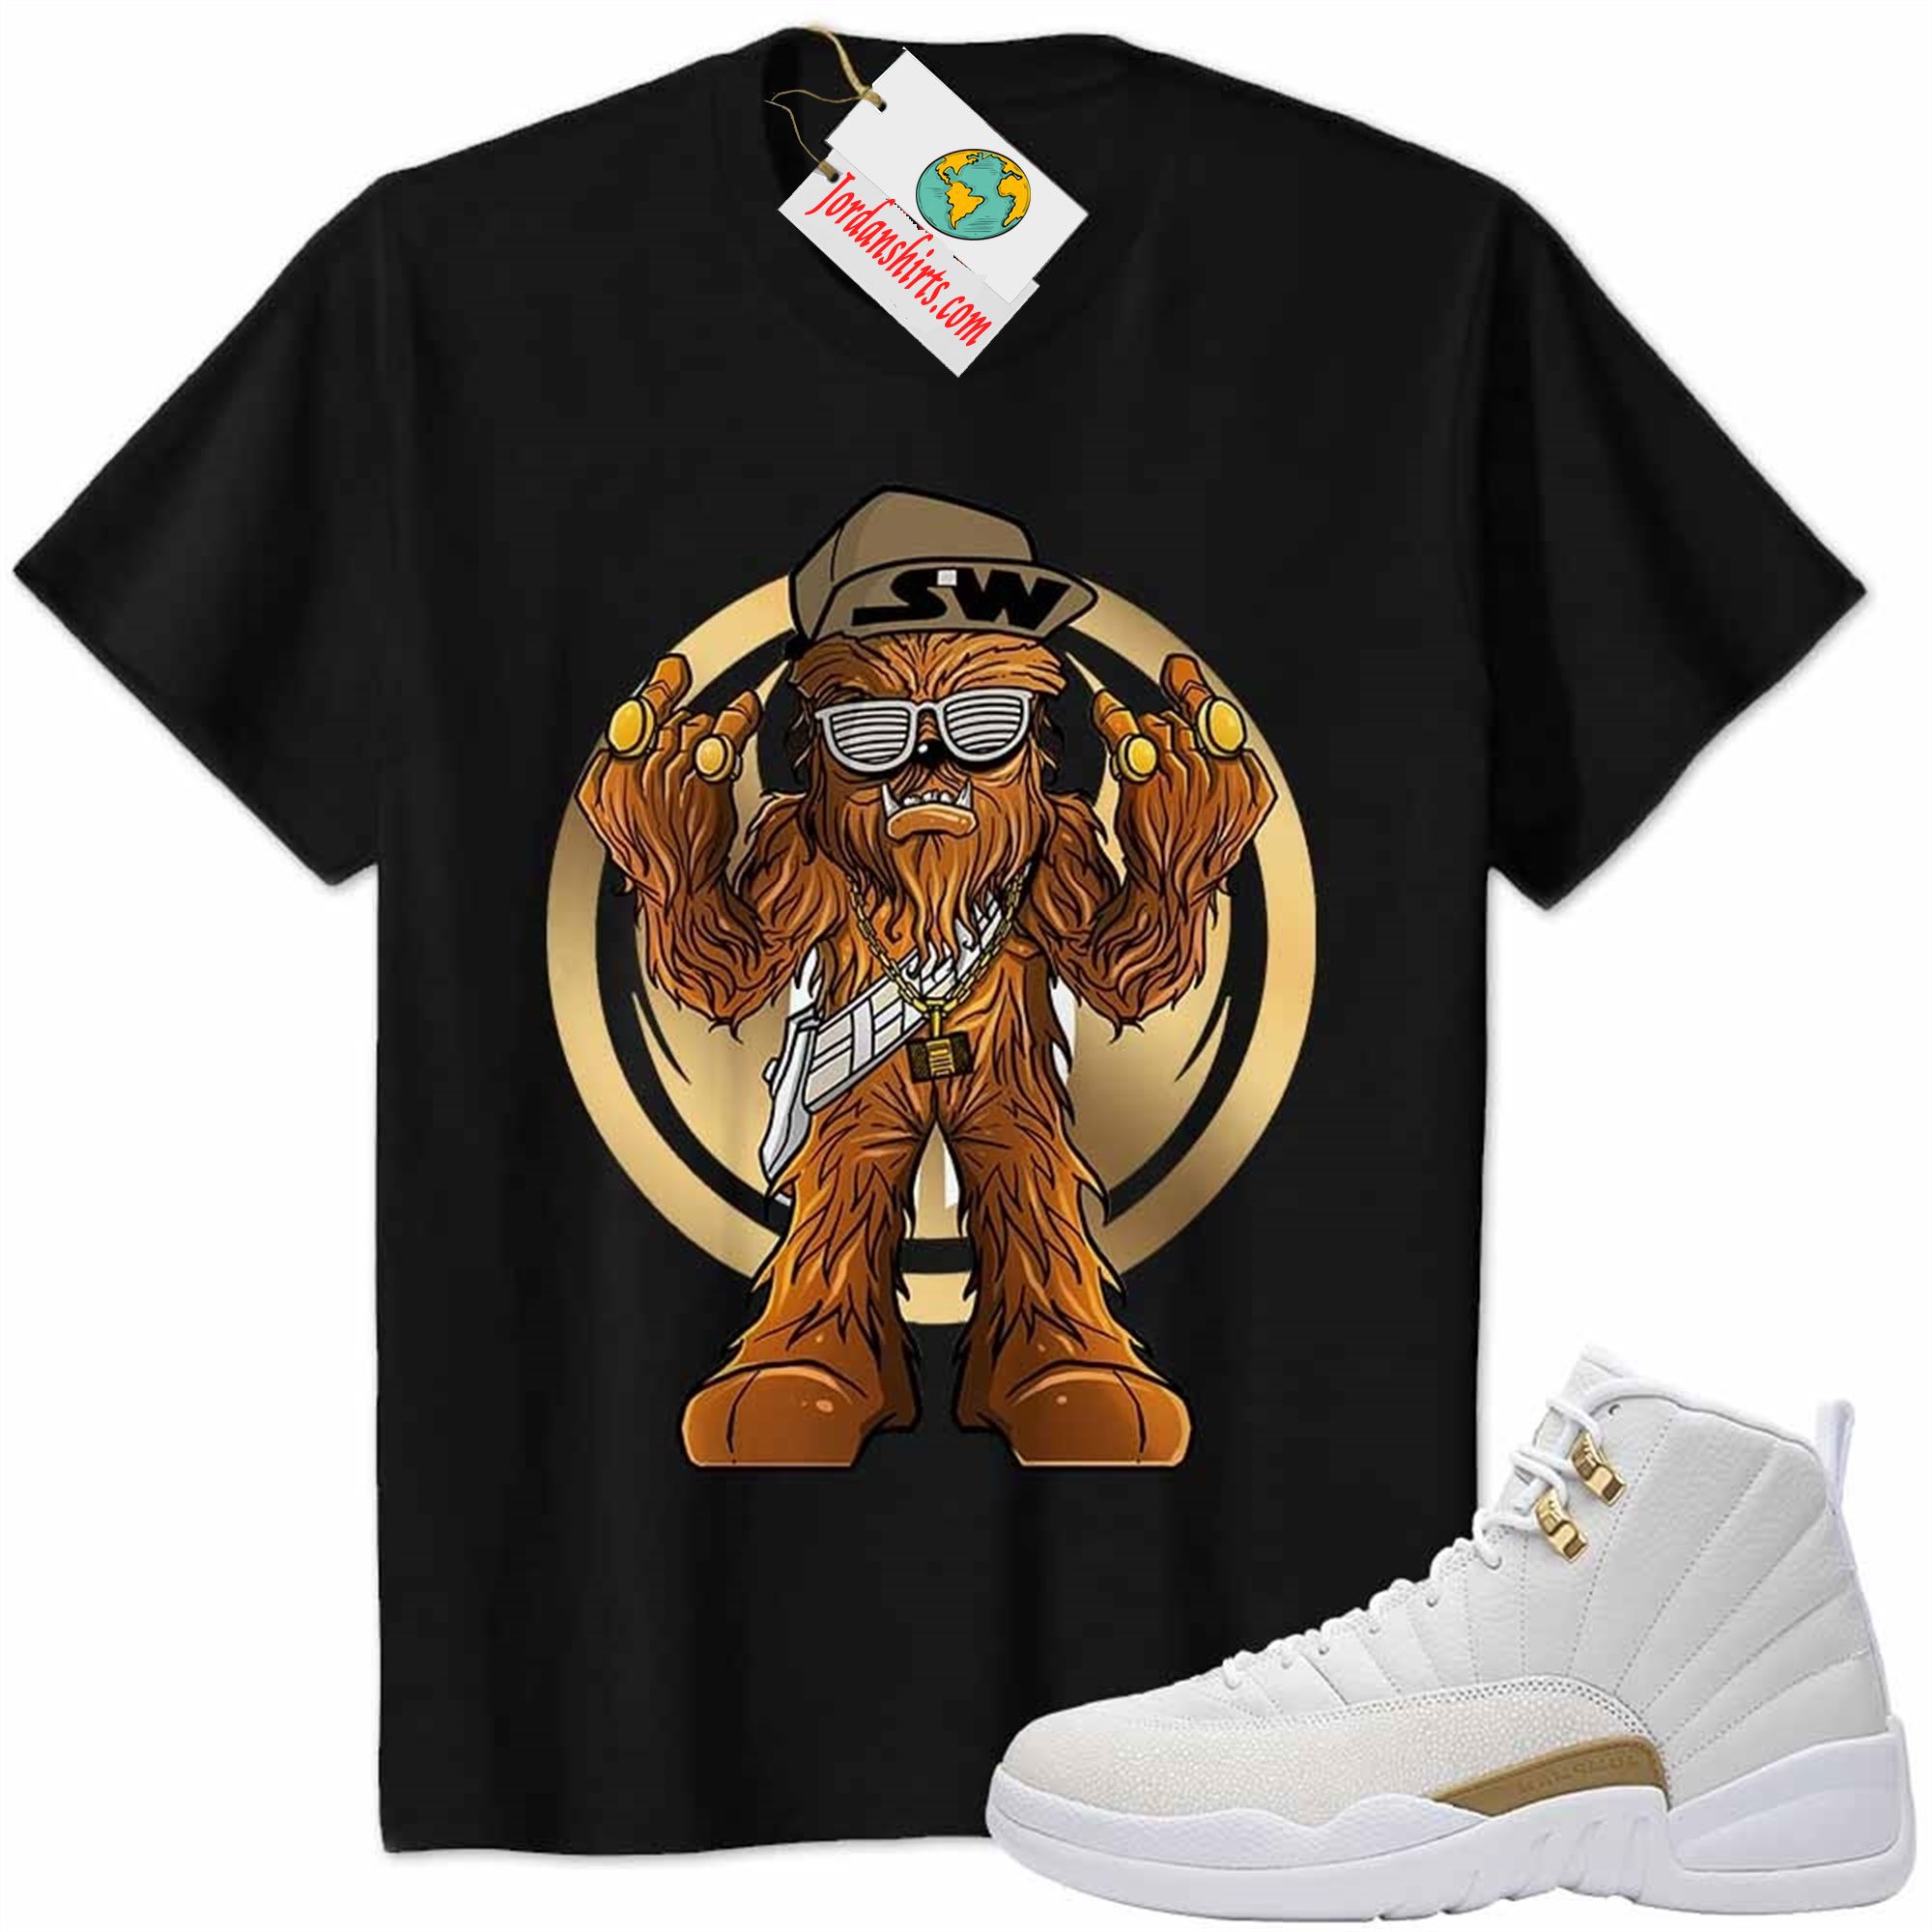 Jordan 12 Shirt, Gangster Chewbacca Stars War Black Air Jordan 12 Ovo 12s Size Up To 5xl